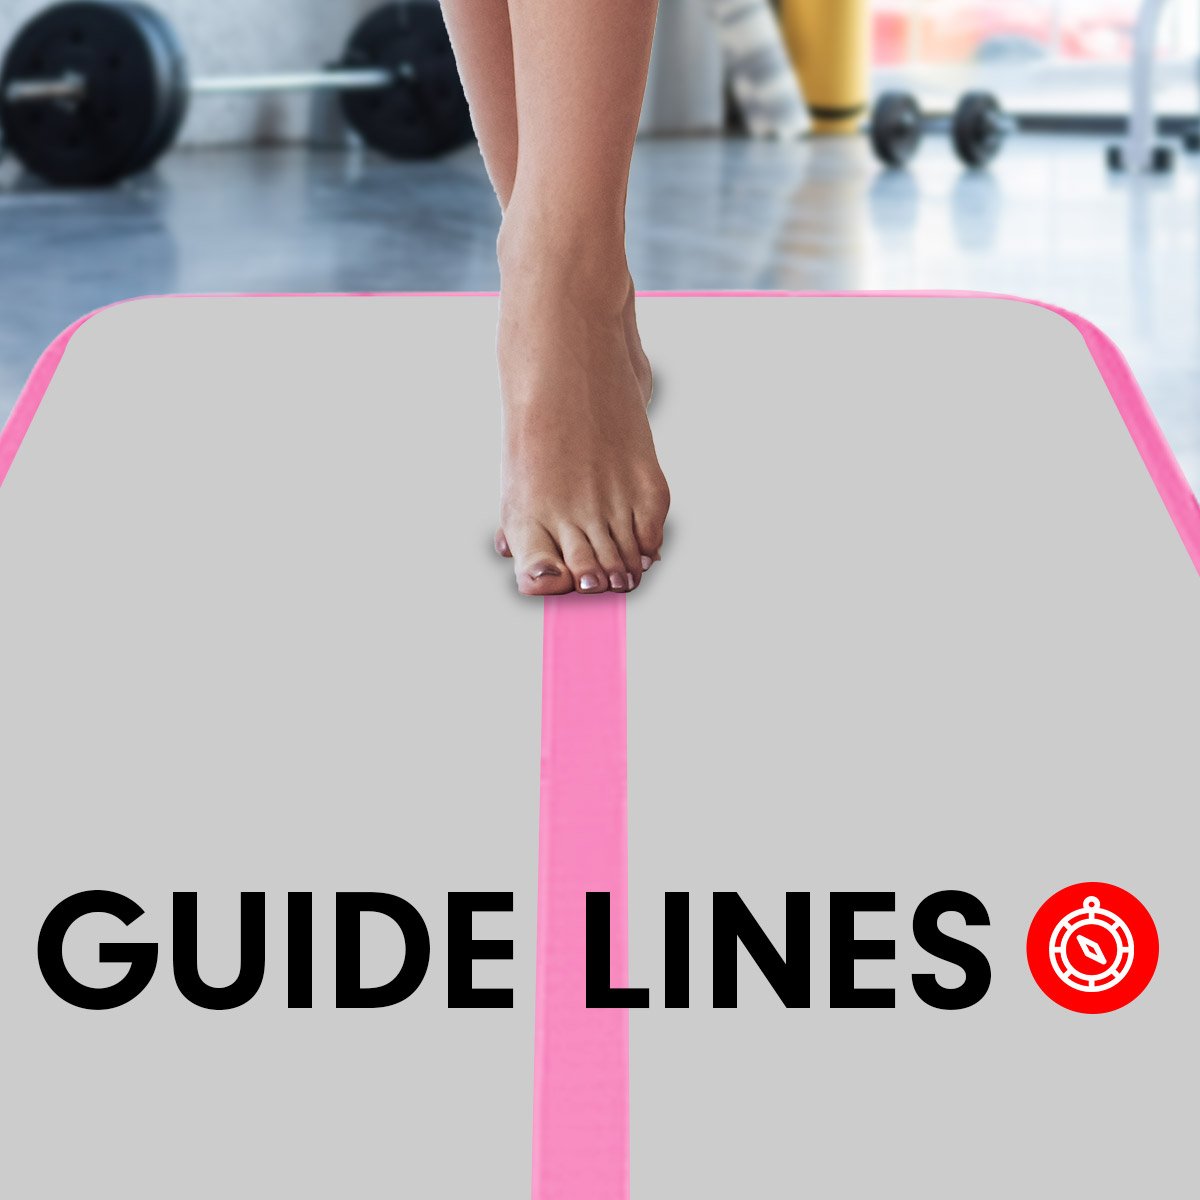 3m x 1m Air Track Inflatable Gymnastics Tumbling Mat - Pink